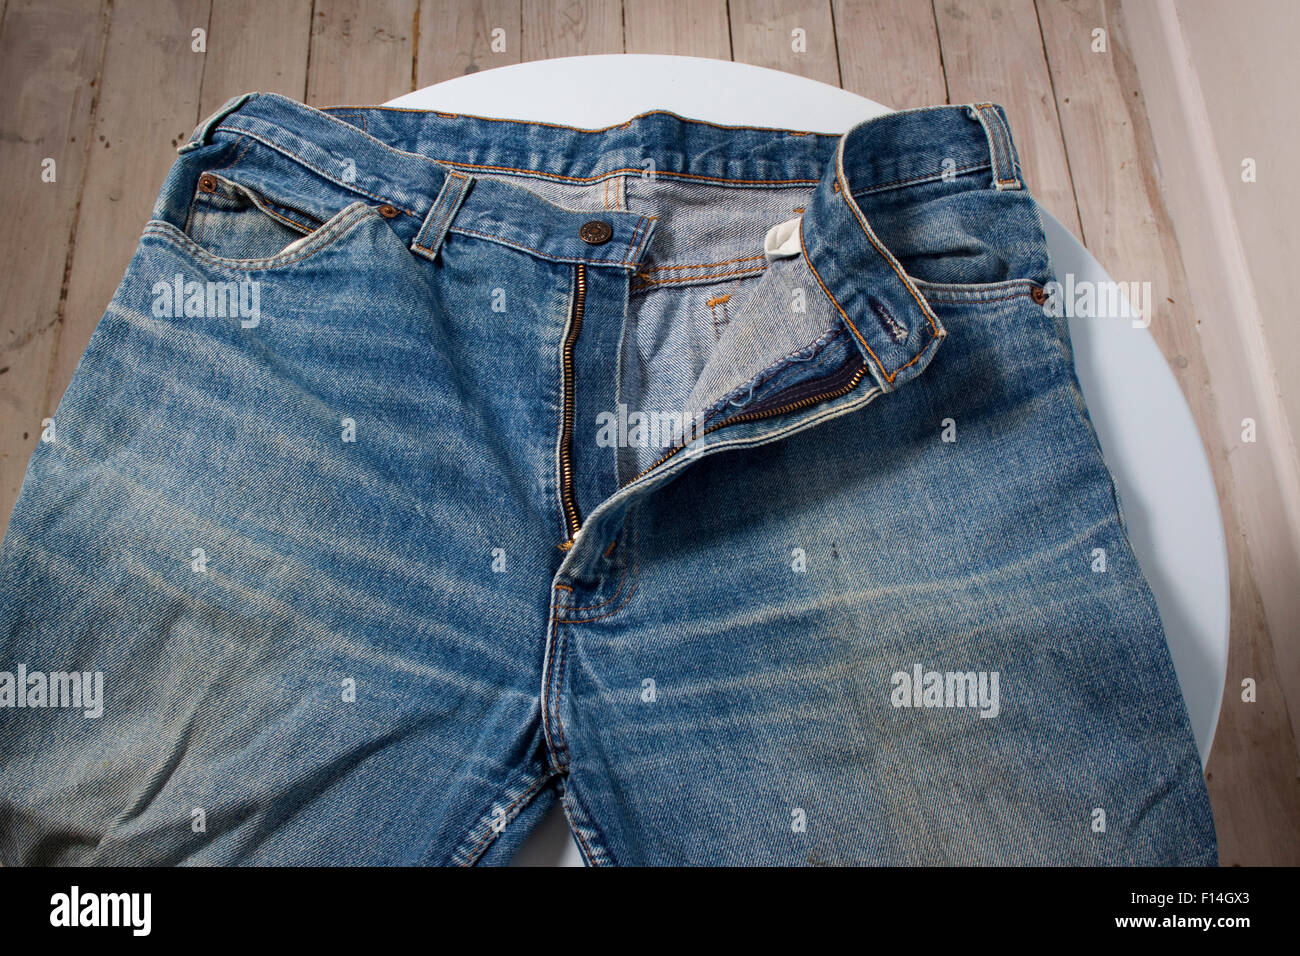 worn pair of Levi jeans Stock Photo 